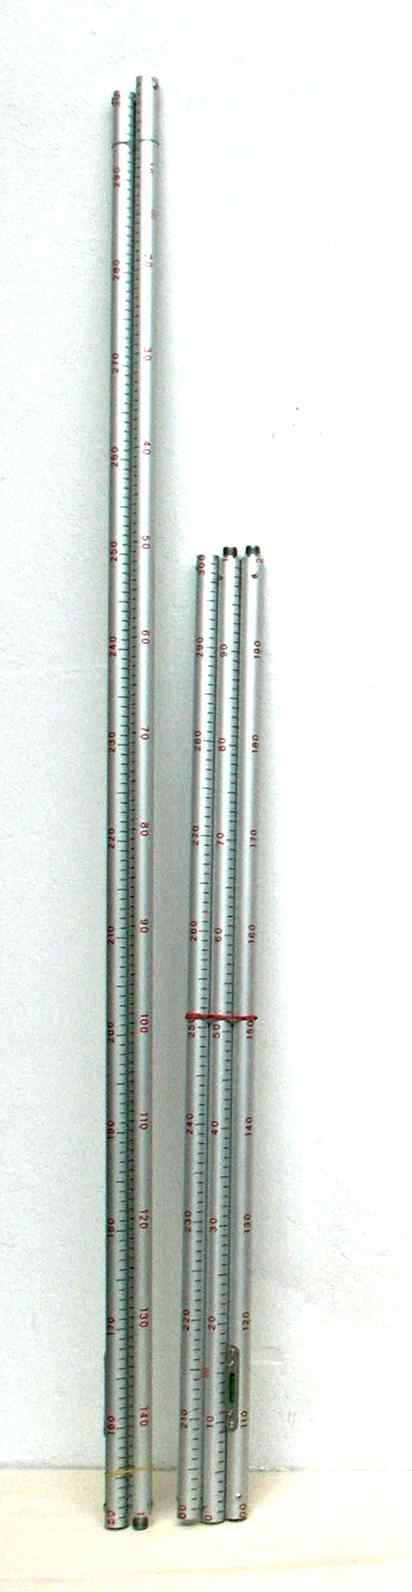 aluminun pole, m. 5 Wood meter pole, m.